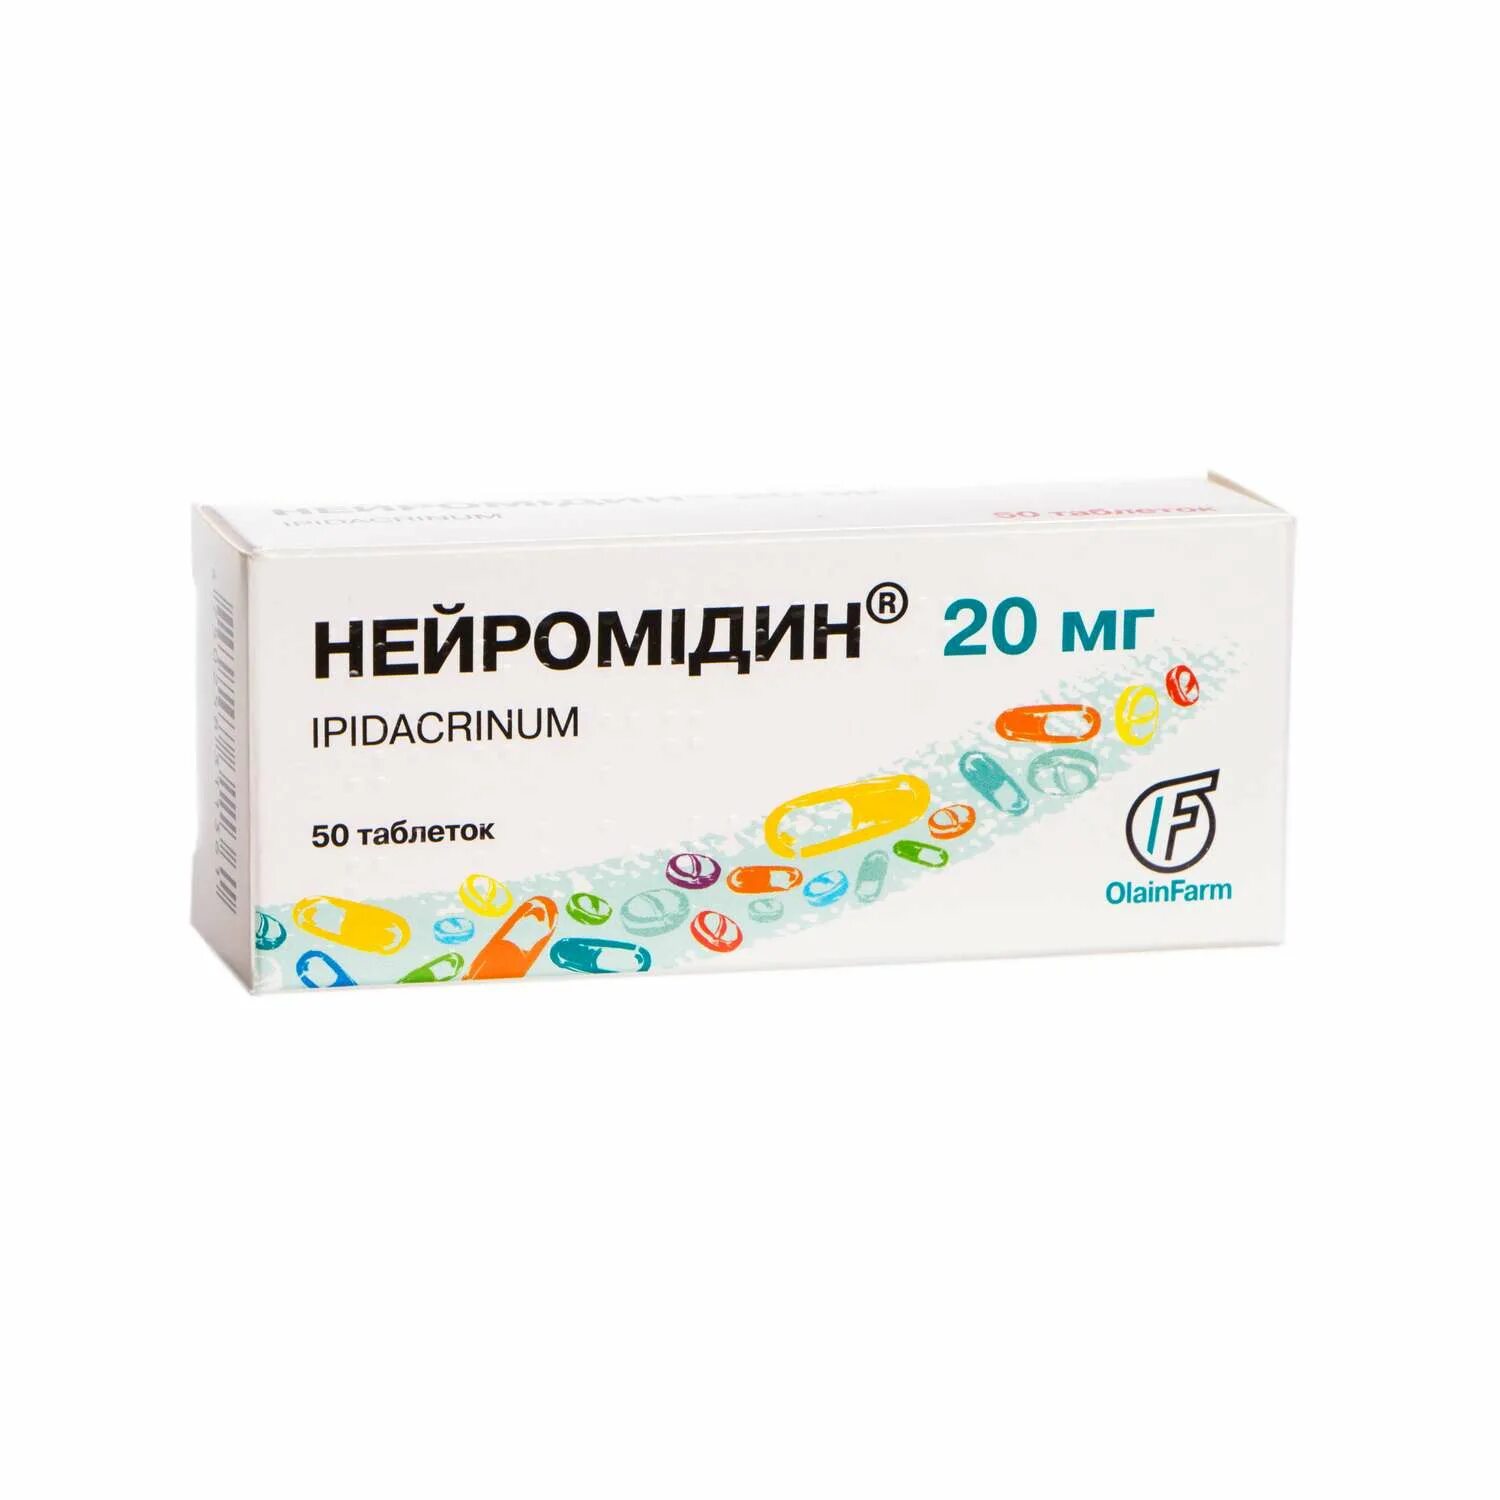 Нейромидин таблетки 20 мг, 50 шт. Олайнфарм. Нейромидин таб 20мг. Нейромидин, таблетки 20мг №50. Нейромидин таблетки 20мг 50шт. Нейромидин 20 мг купить